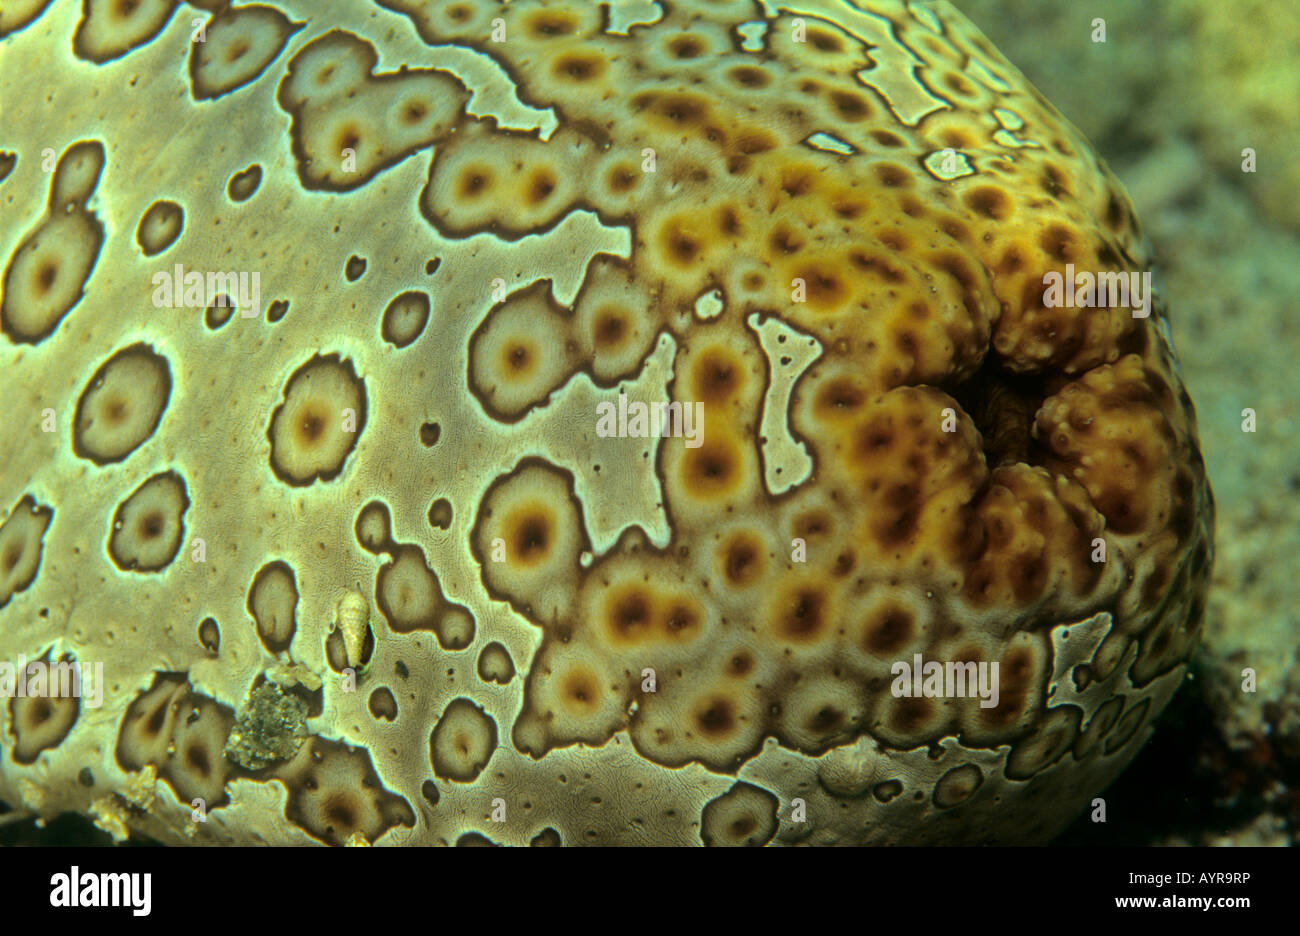 Detail, Eyed - or Leopard Sea Cucumber (Bohadschia argus), Philippines Stock Photo